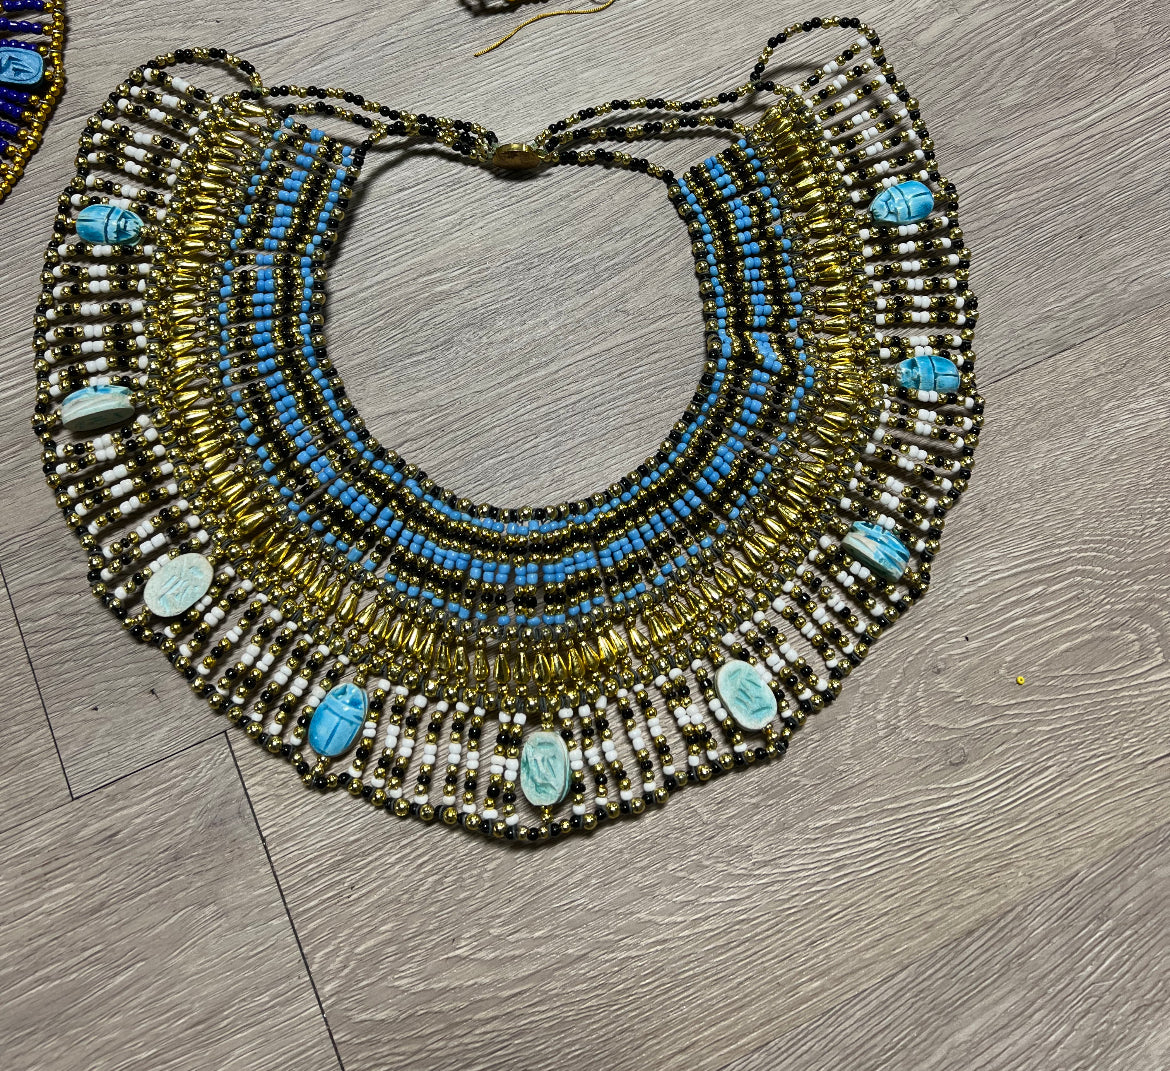 Queen Cleopatra necklace